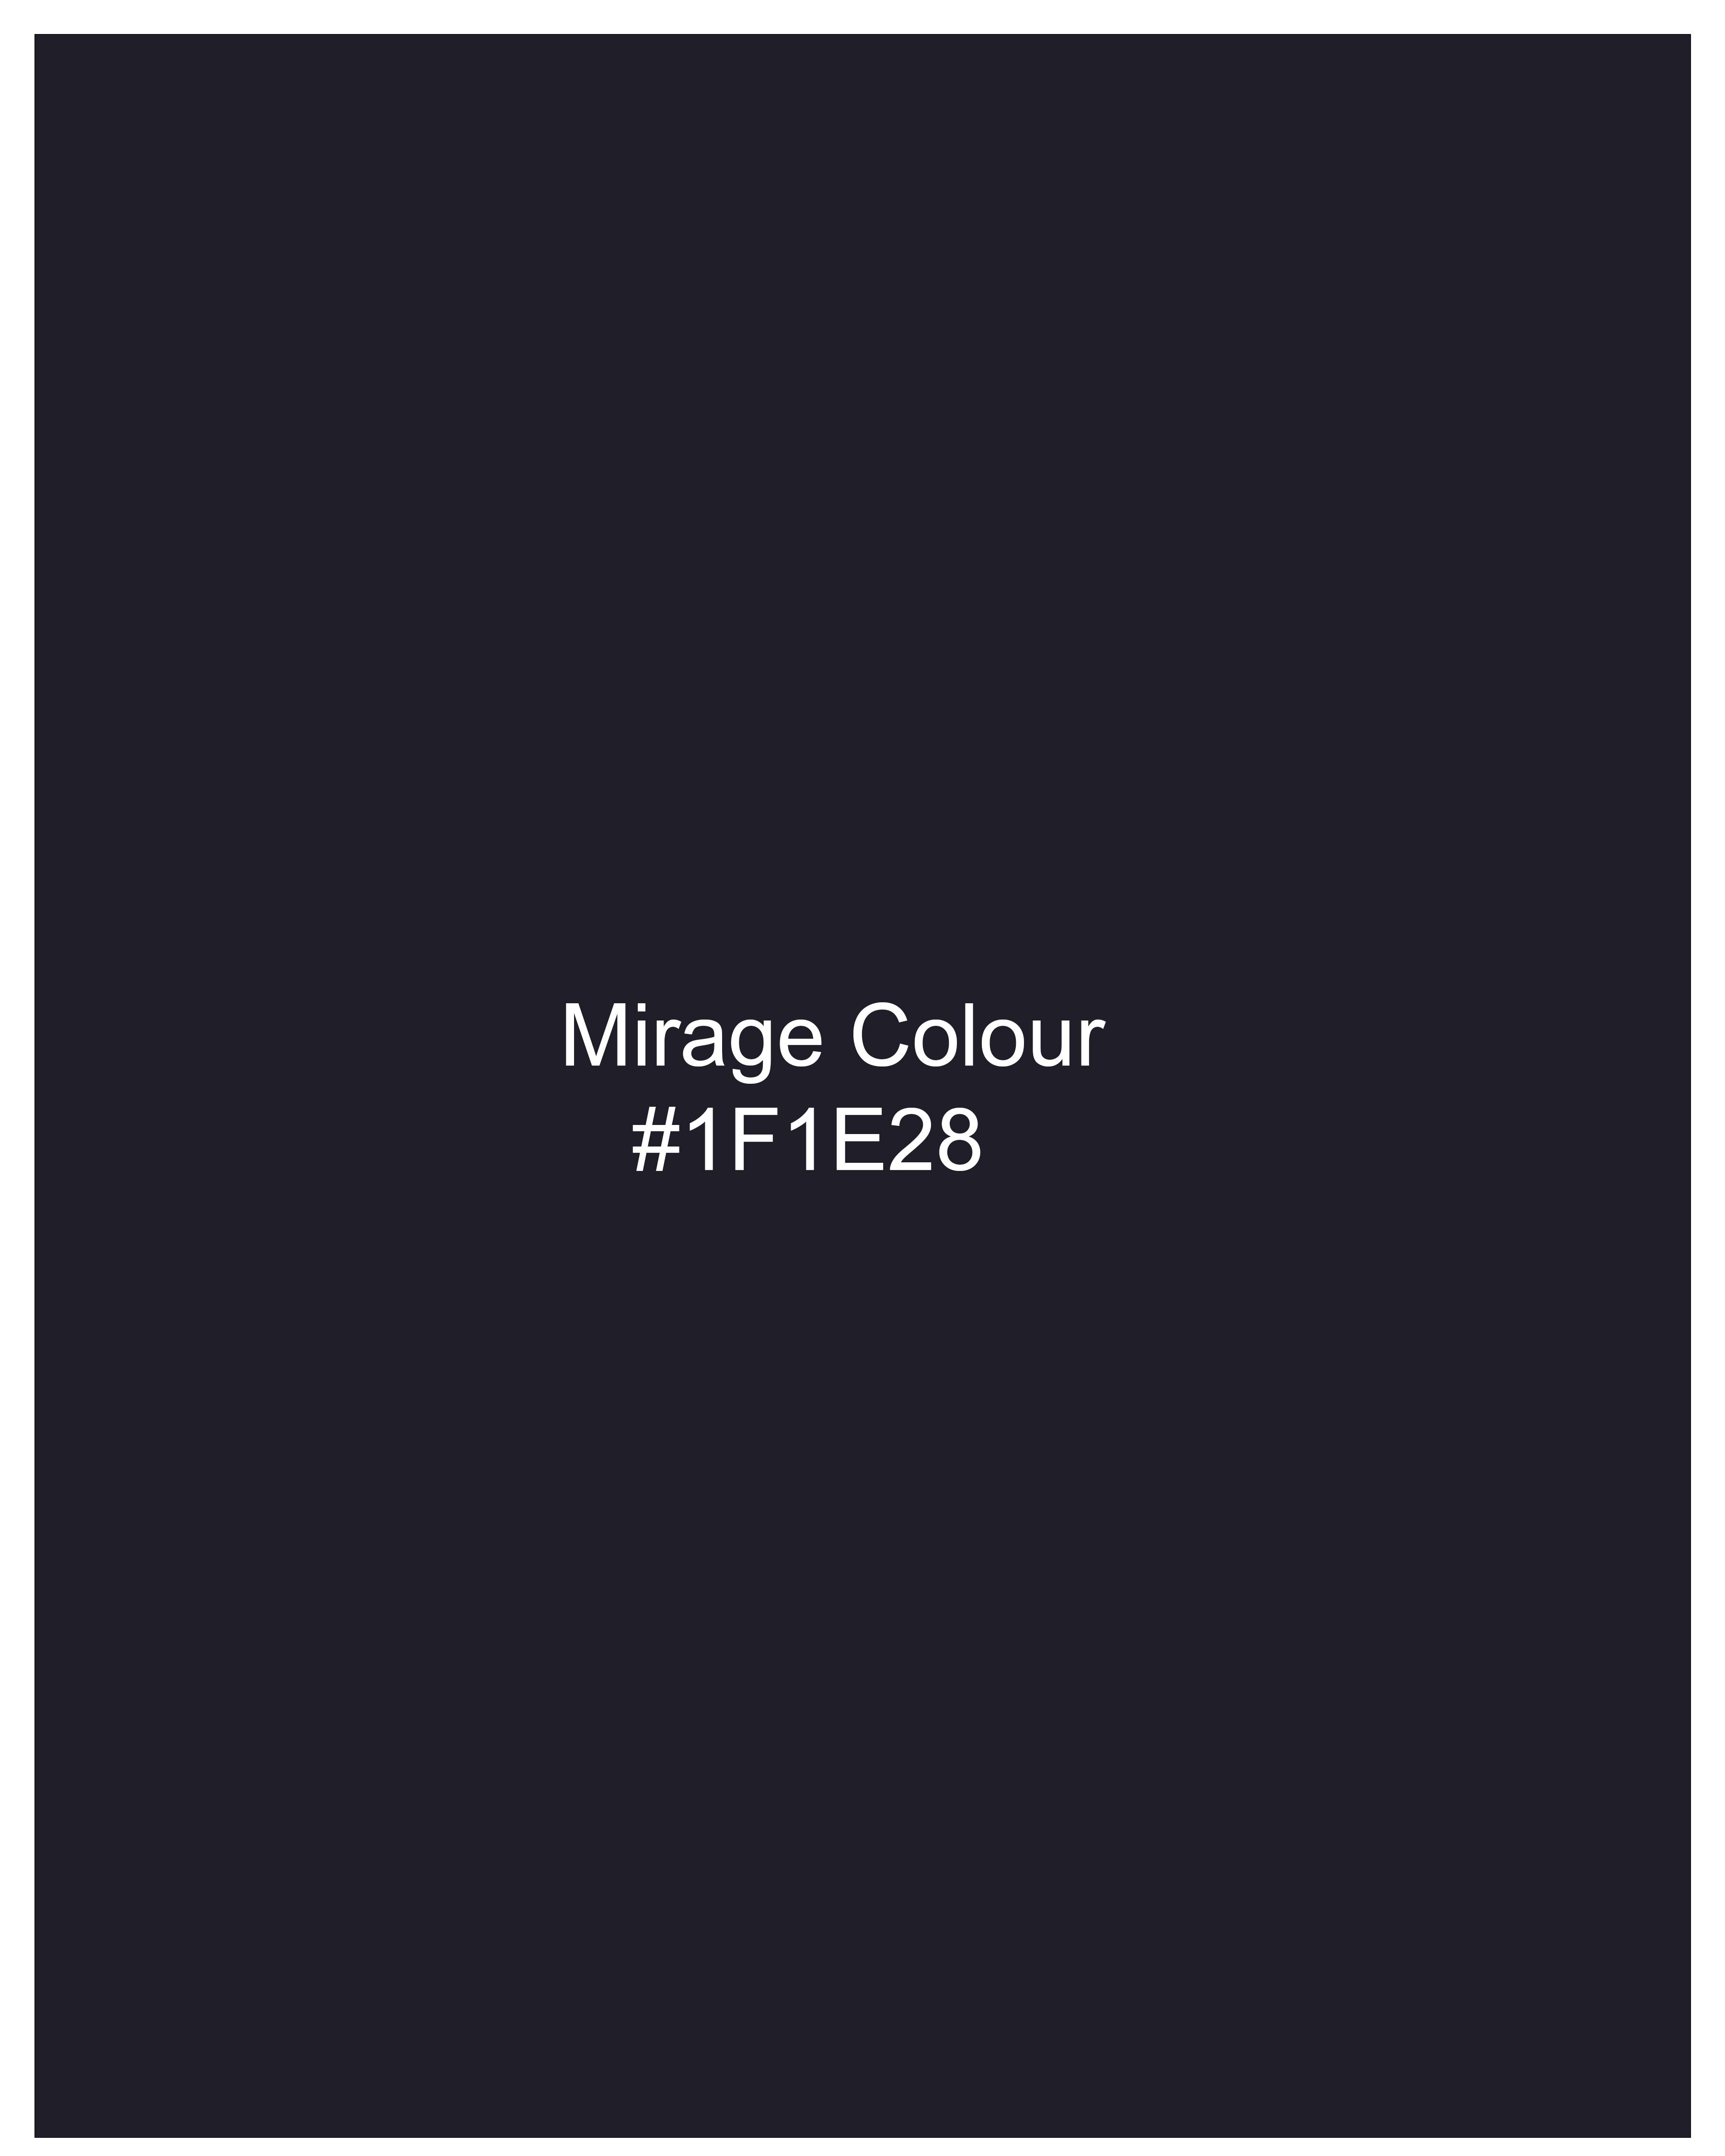 Mirage Blue Windowpane Bandhgala Blazer BL2333-BG-36, BL2333-BG-38, BL2333-BG-40, BL2333-BG-42, BL2333-BG-44, BL2333-BG-46, BL2333-BG-48, BL2333-BG-50, BL2333-BG-52, BL2333-BG-54, BL2333-BG-56, BL2333-BG-58, BL2333-BG-60